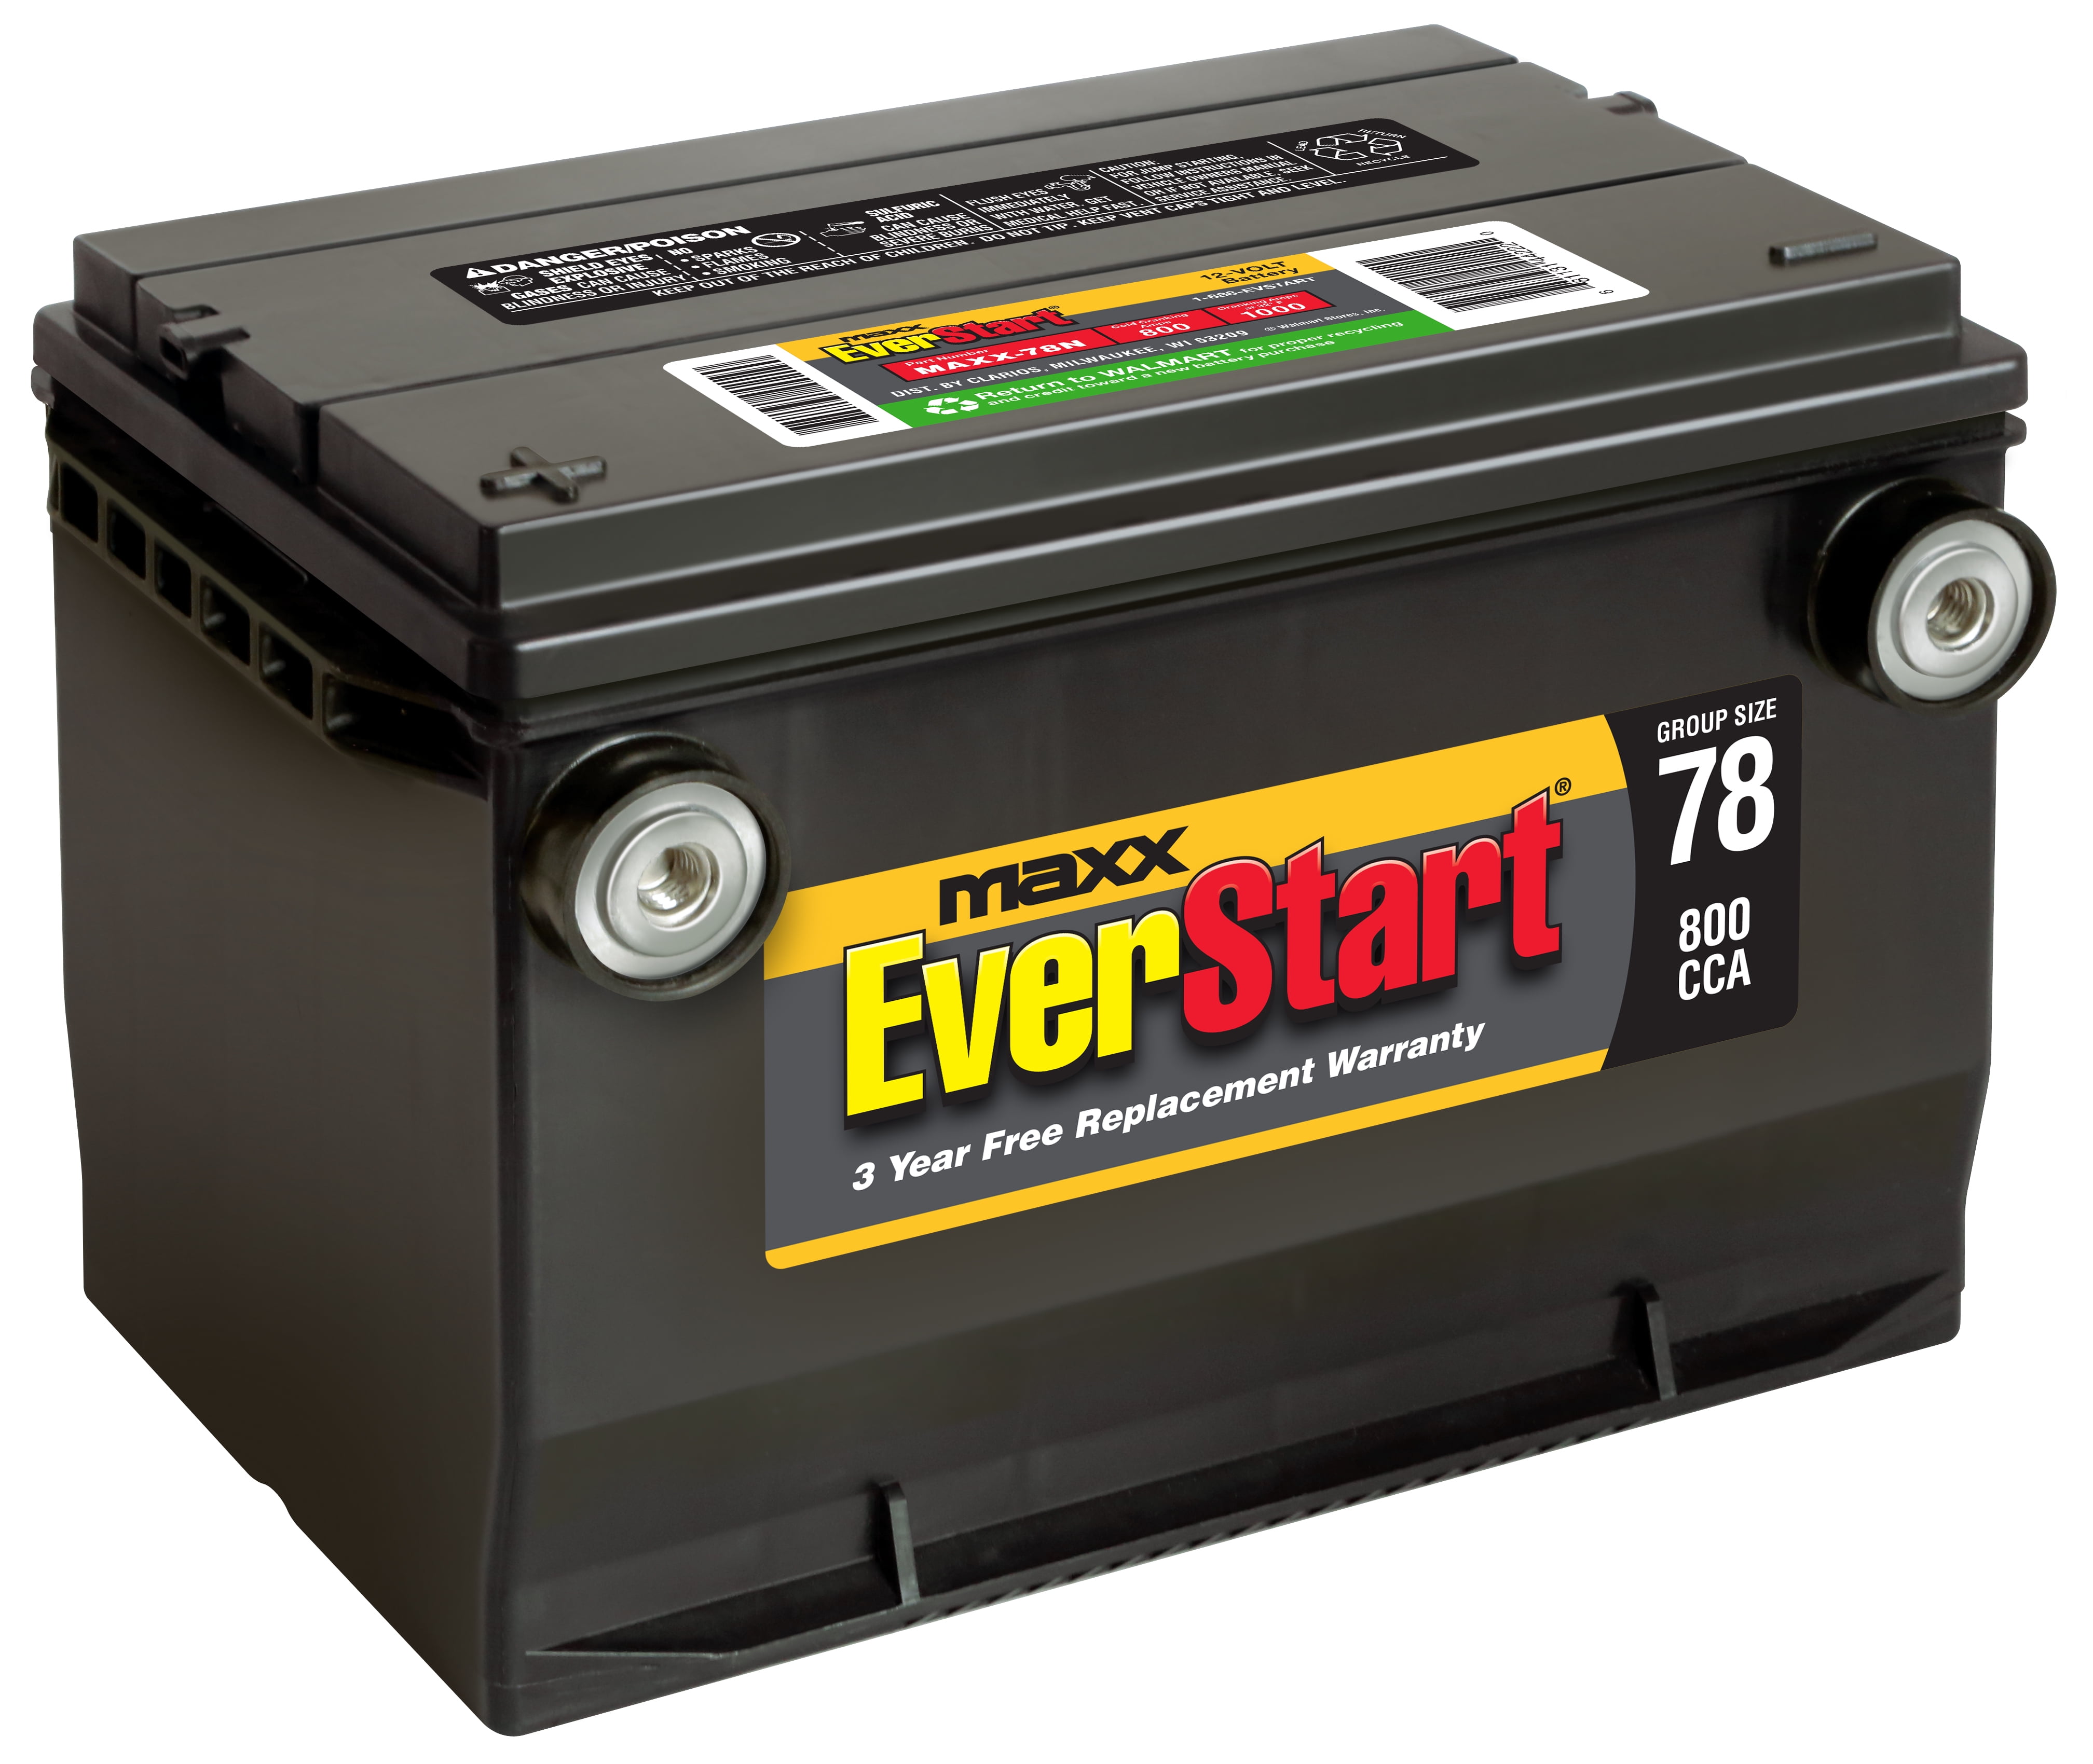 everstart-maxx-lead-acid-automotive-battery-group-size-78n-walmart-walmart